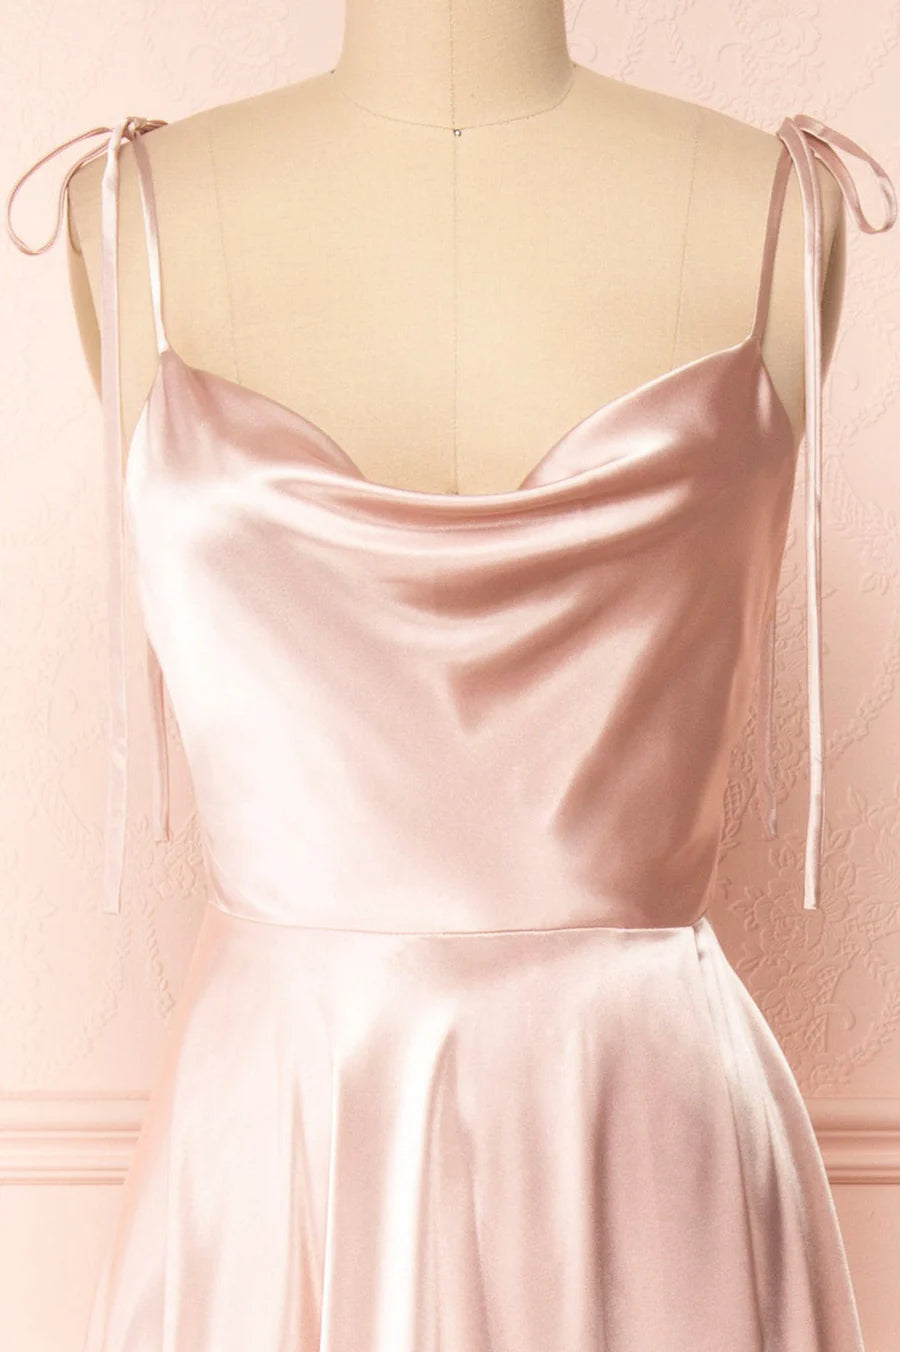 Simple Satin Long Prom Dresses, A-Line Formal Evening Dresses nv1451